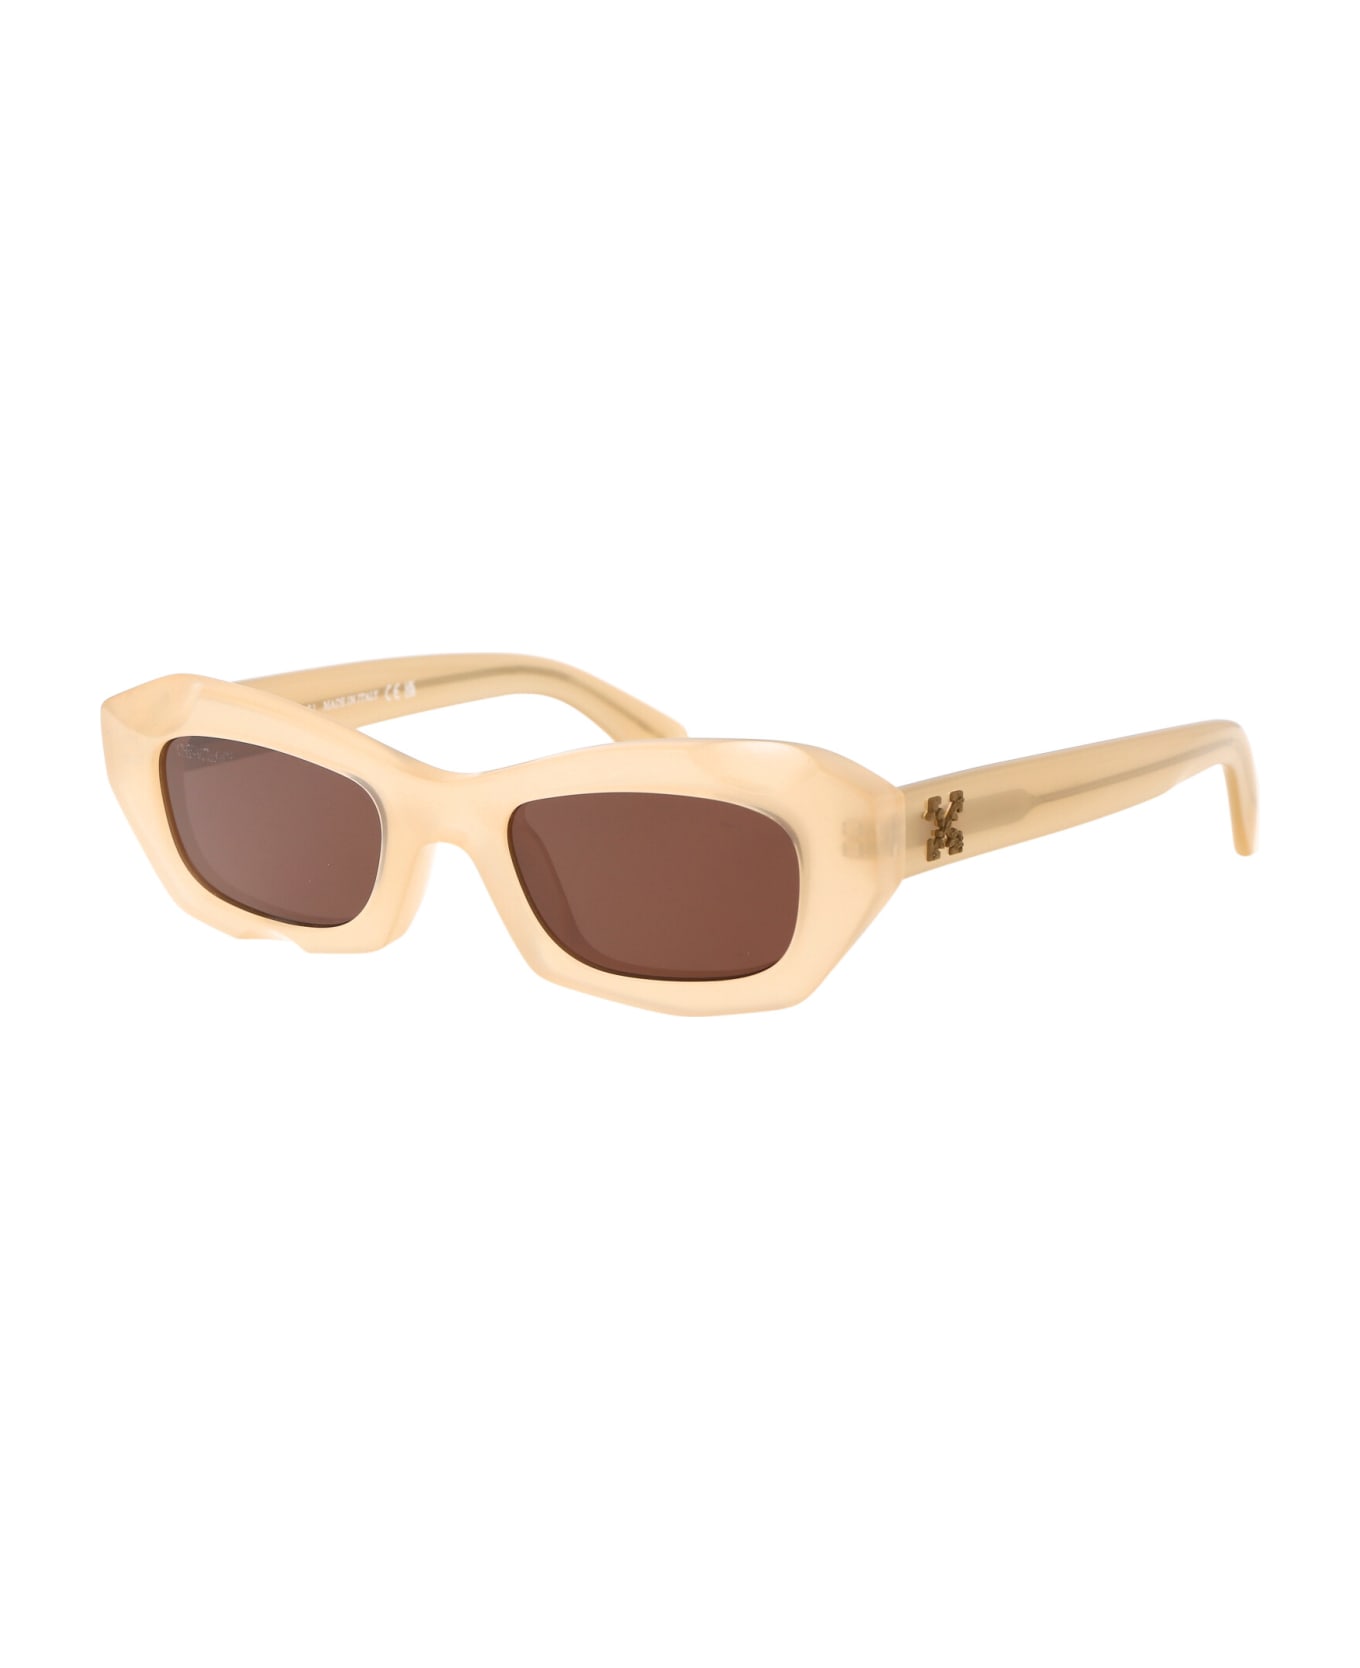 Off-White Venezia Rectangular Frame Sunglasses - 1760 SAND サングラス